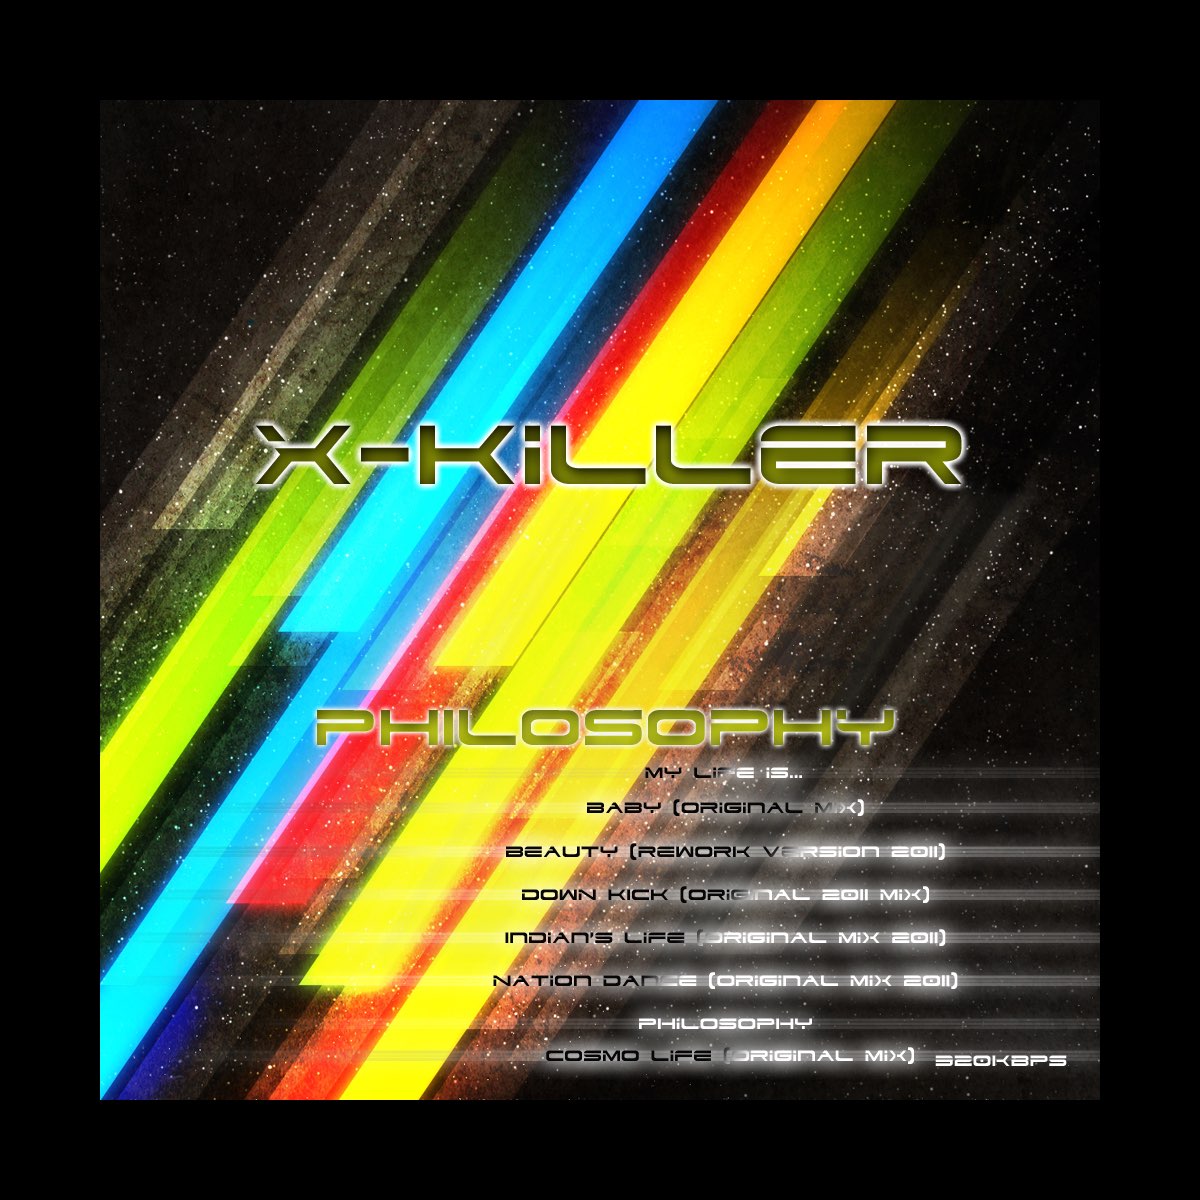 Killing my life. X-Killer Philosophy (Original Mix). XKILLER. Watch me playing with myself (main Mix) от DJ Antoine & Player & Remady.